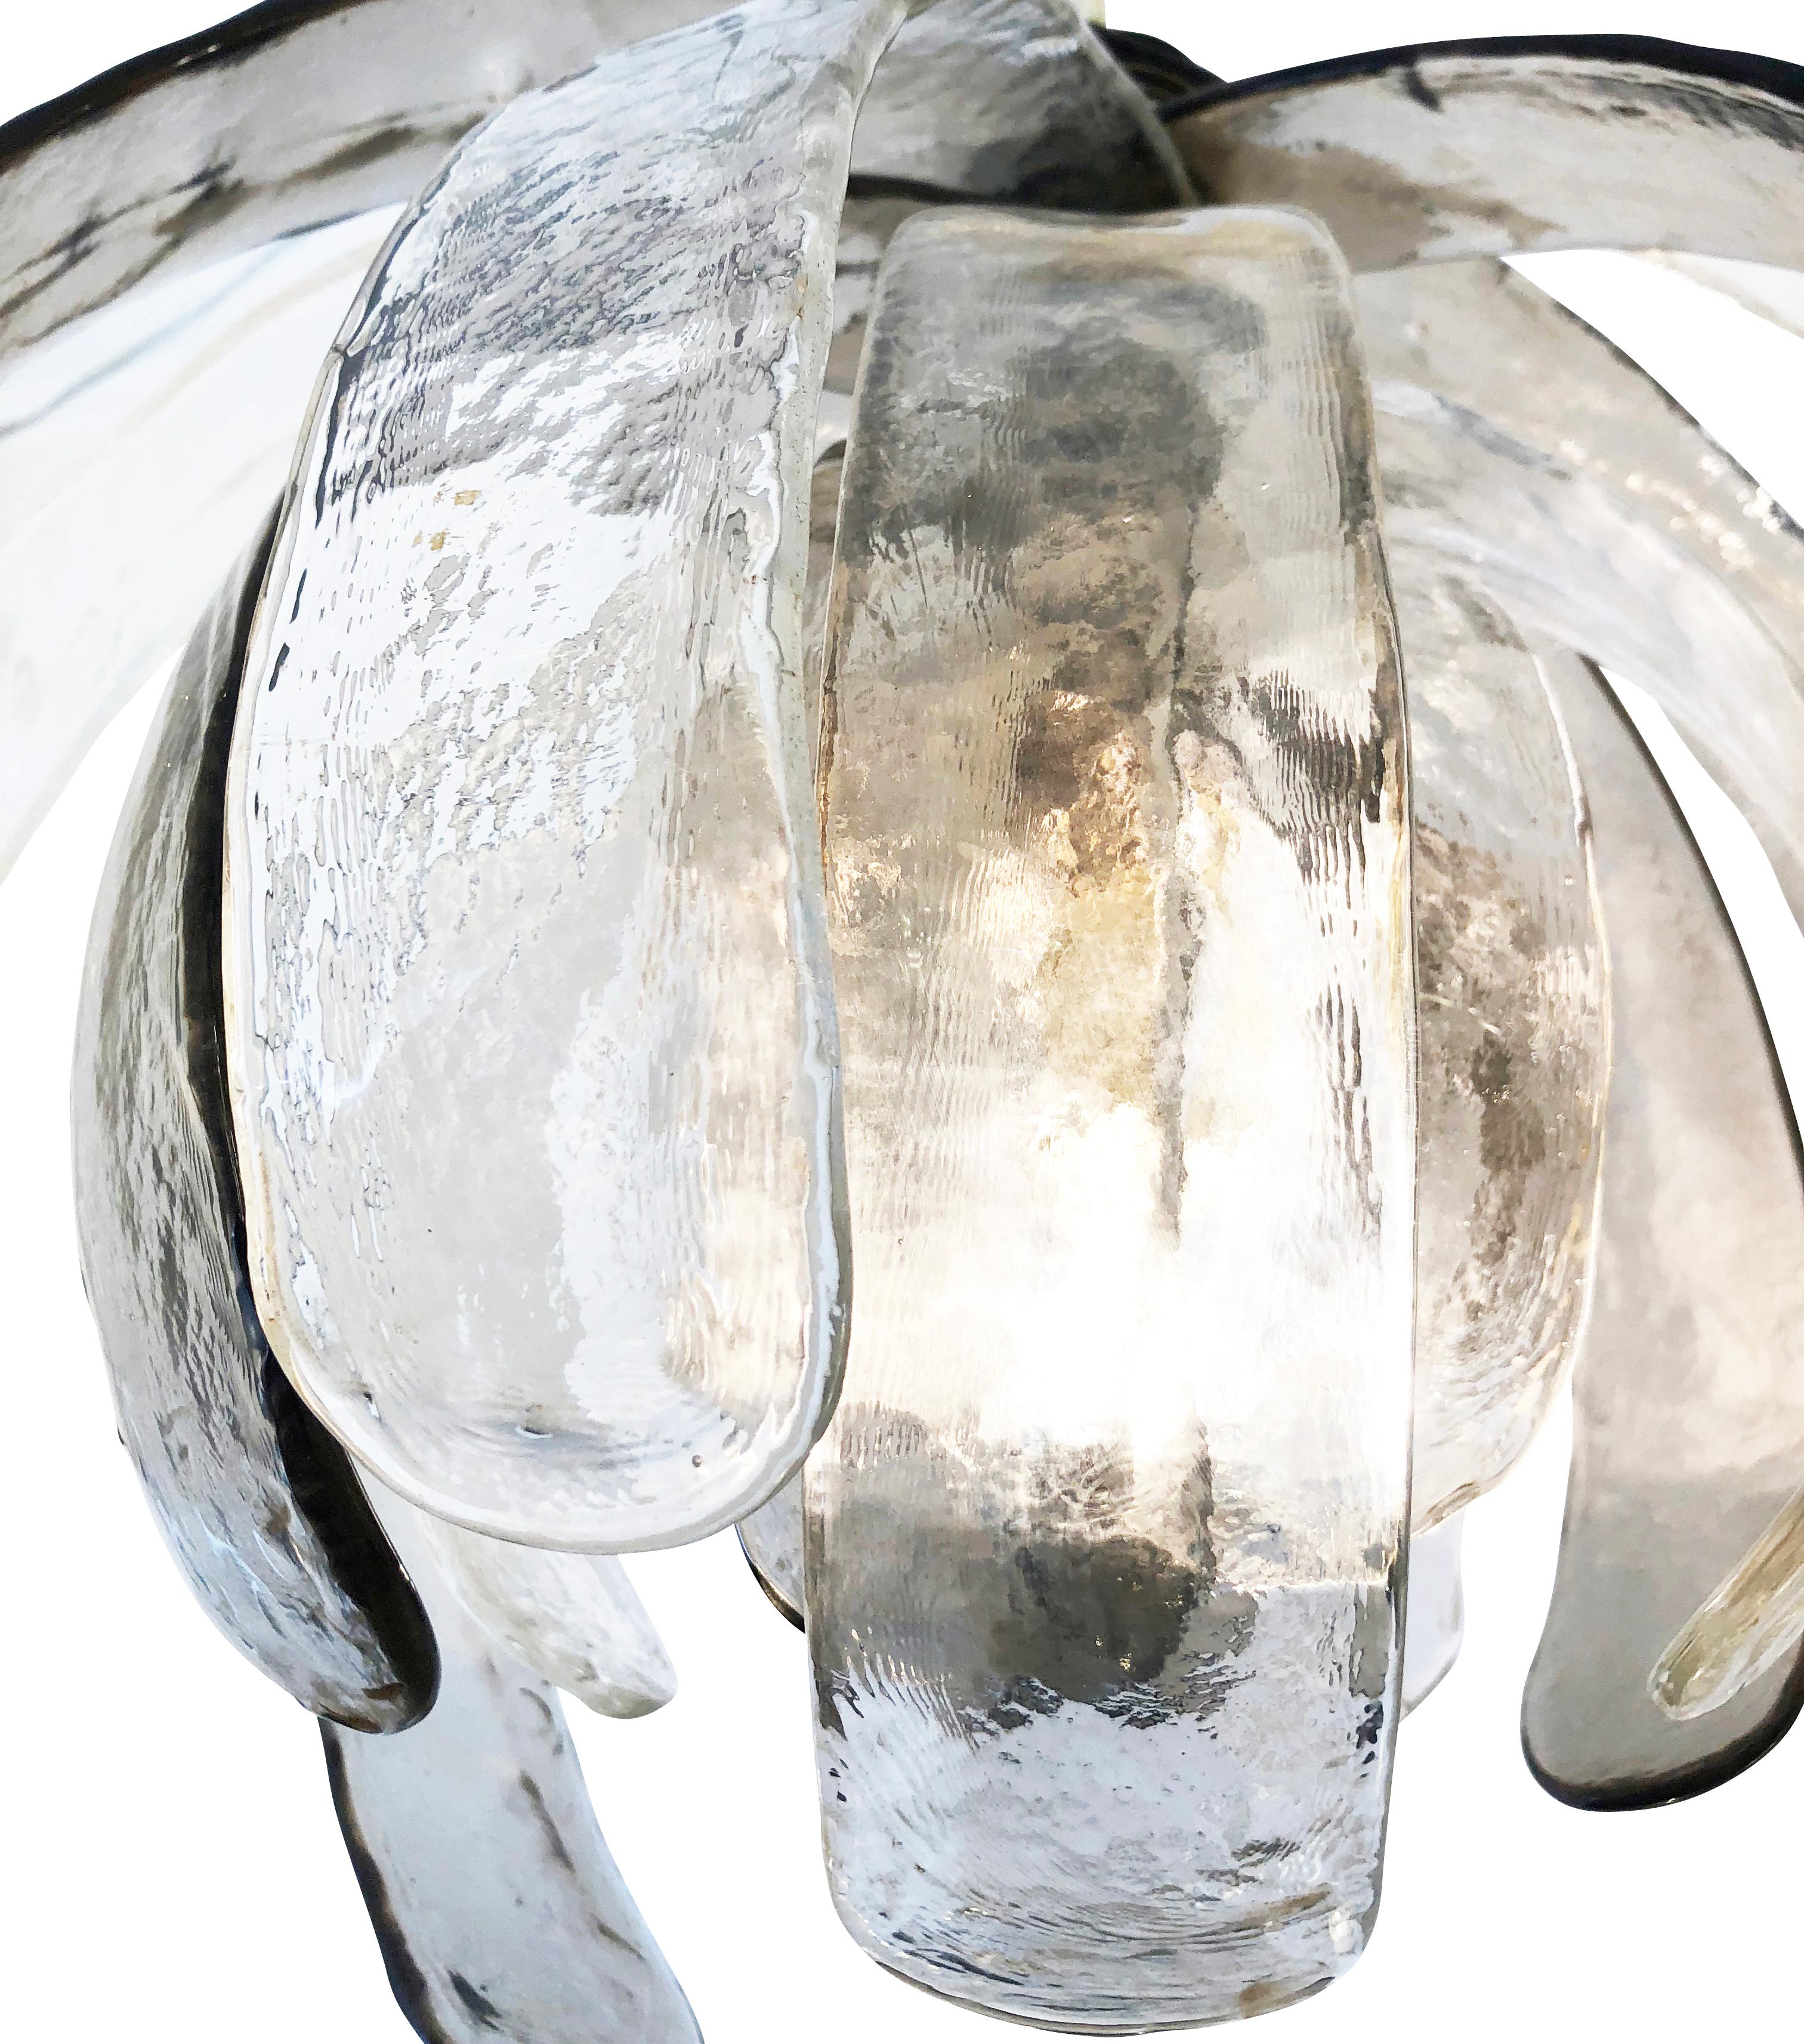 Artichoke Murano Glass Chandelier by Mazzega In Good Condition In New York, NY